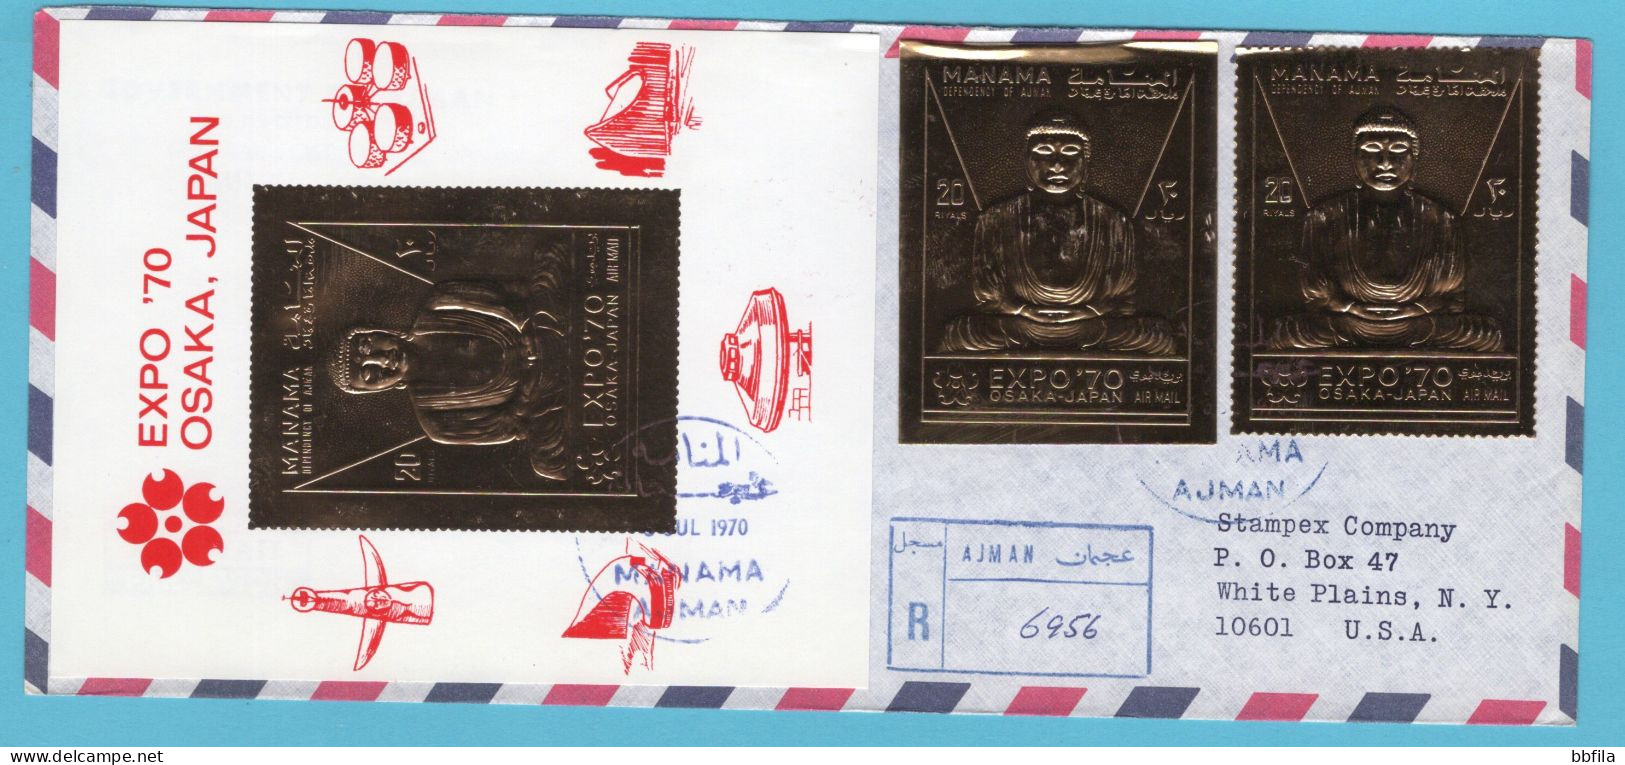 UNITED ARAB EMIRATES MANAMA R Cover 1970 Ajman With Expo Japan Buda Miniature Sheet + Stamps Perforated /imperforated - Manama